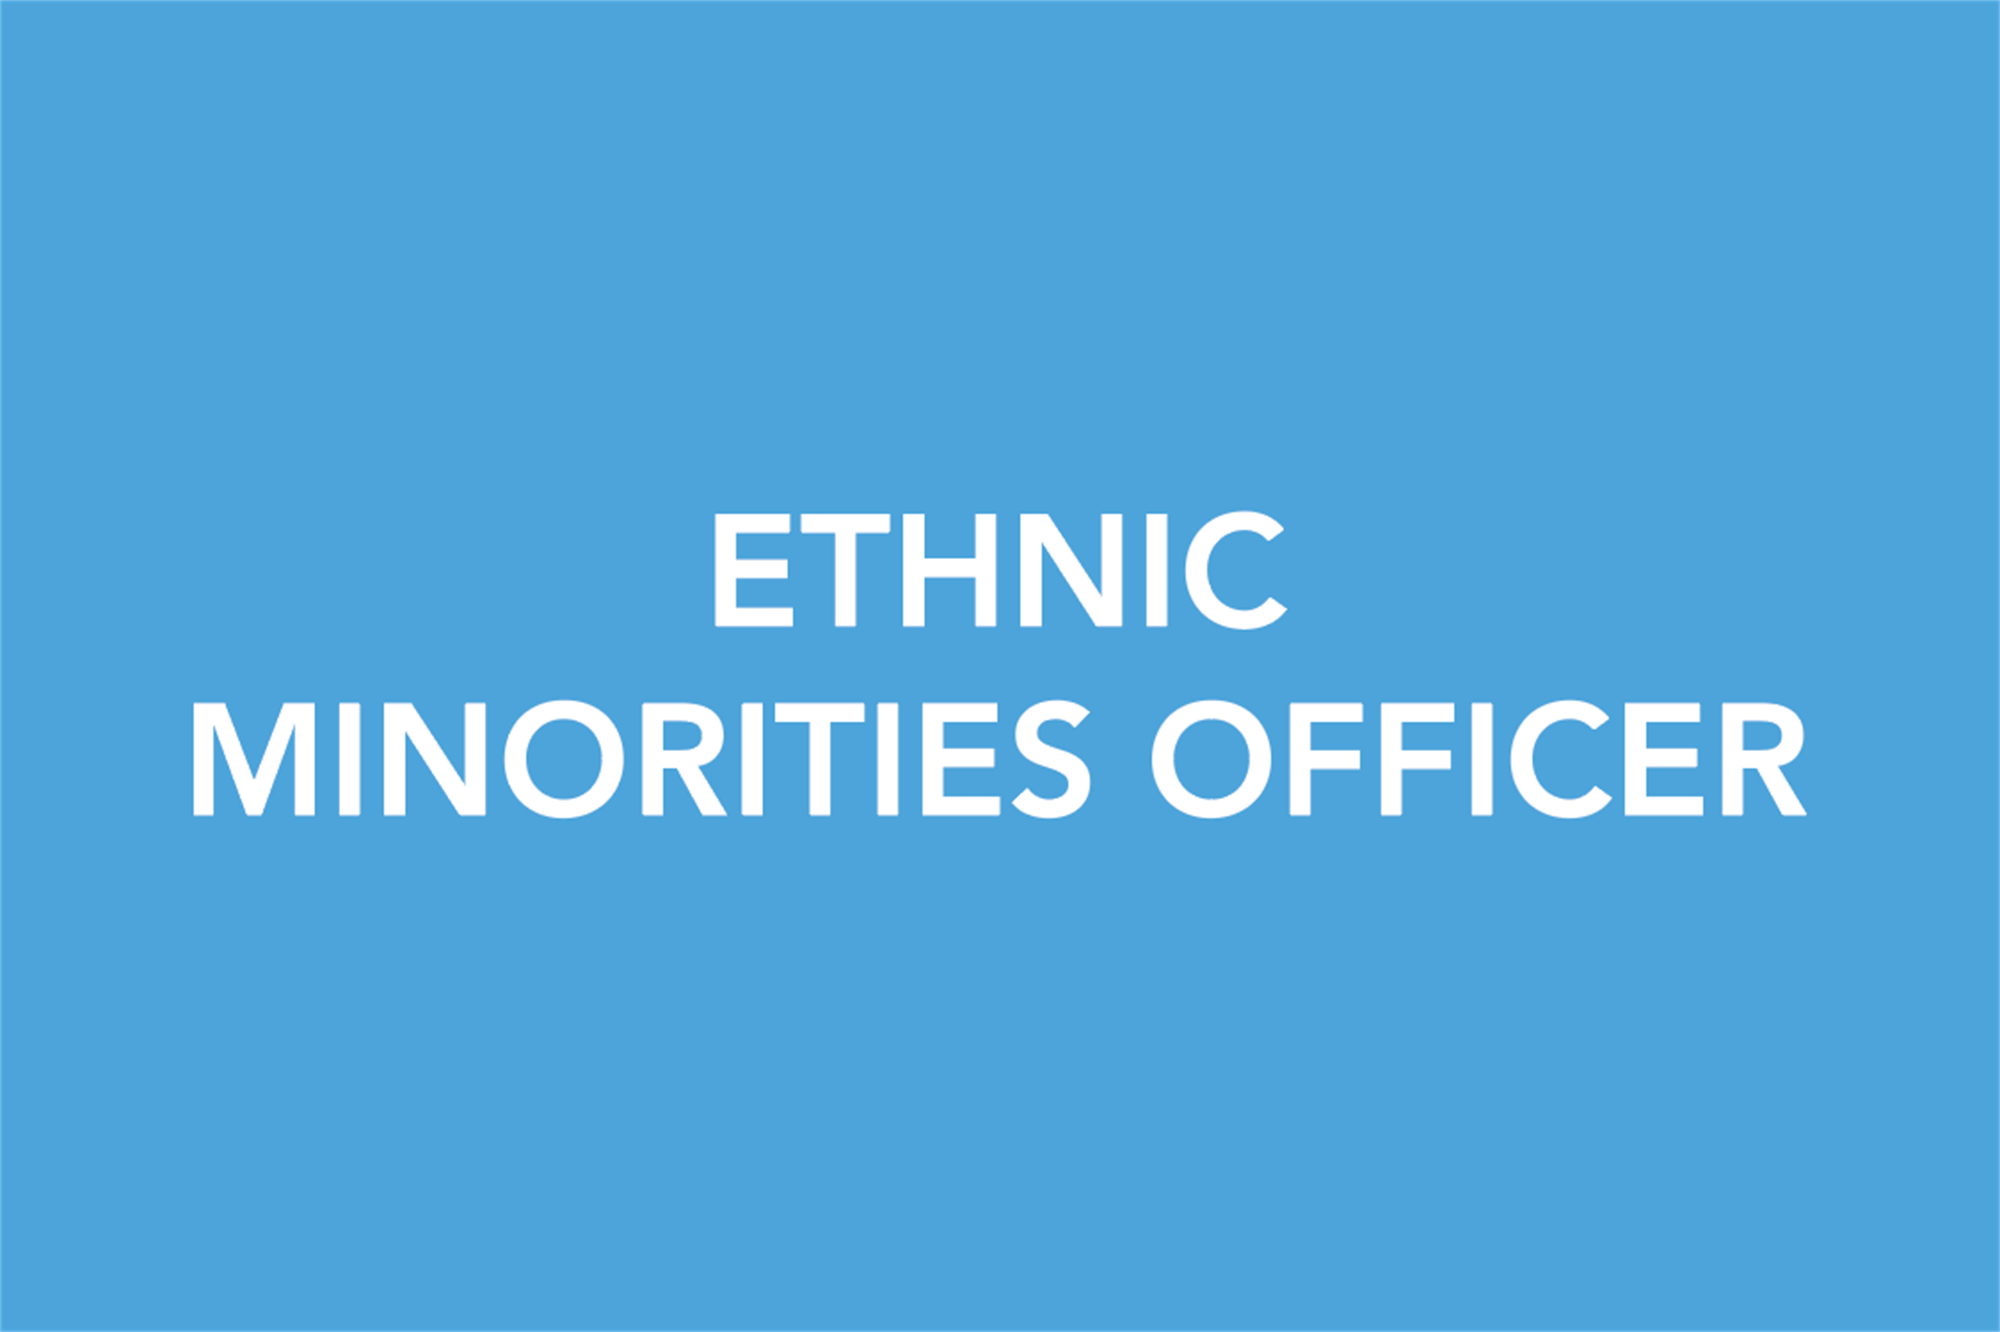 Ethnic minorities officer